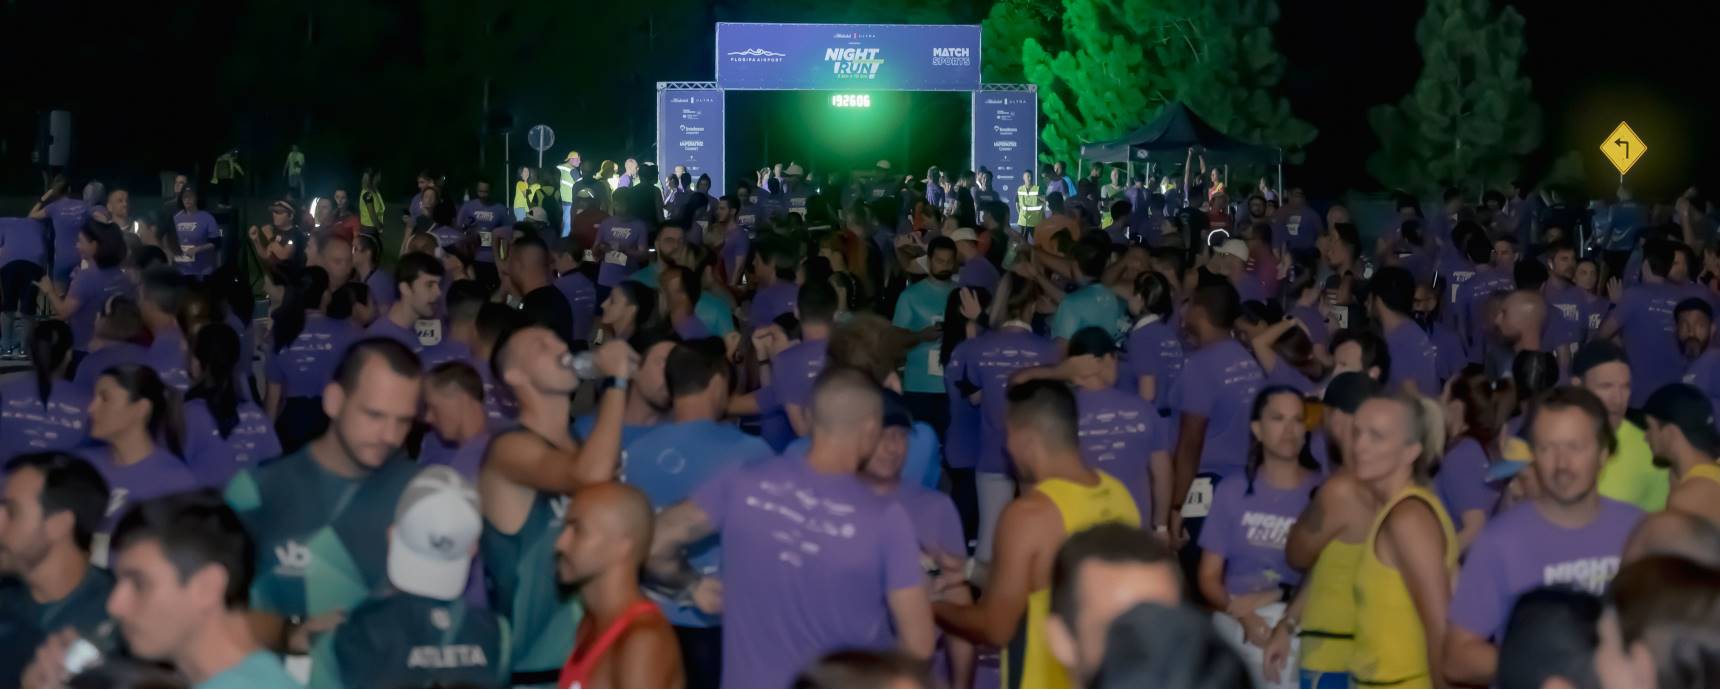 Noche para correr Floripa Aeropuerto deleita a 1,2 atletas en carrera nocturna sin precedentes